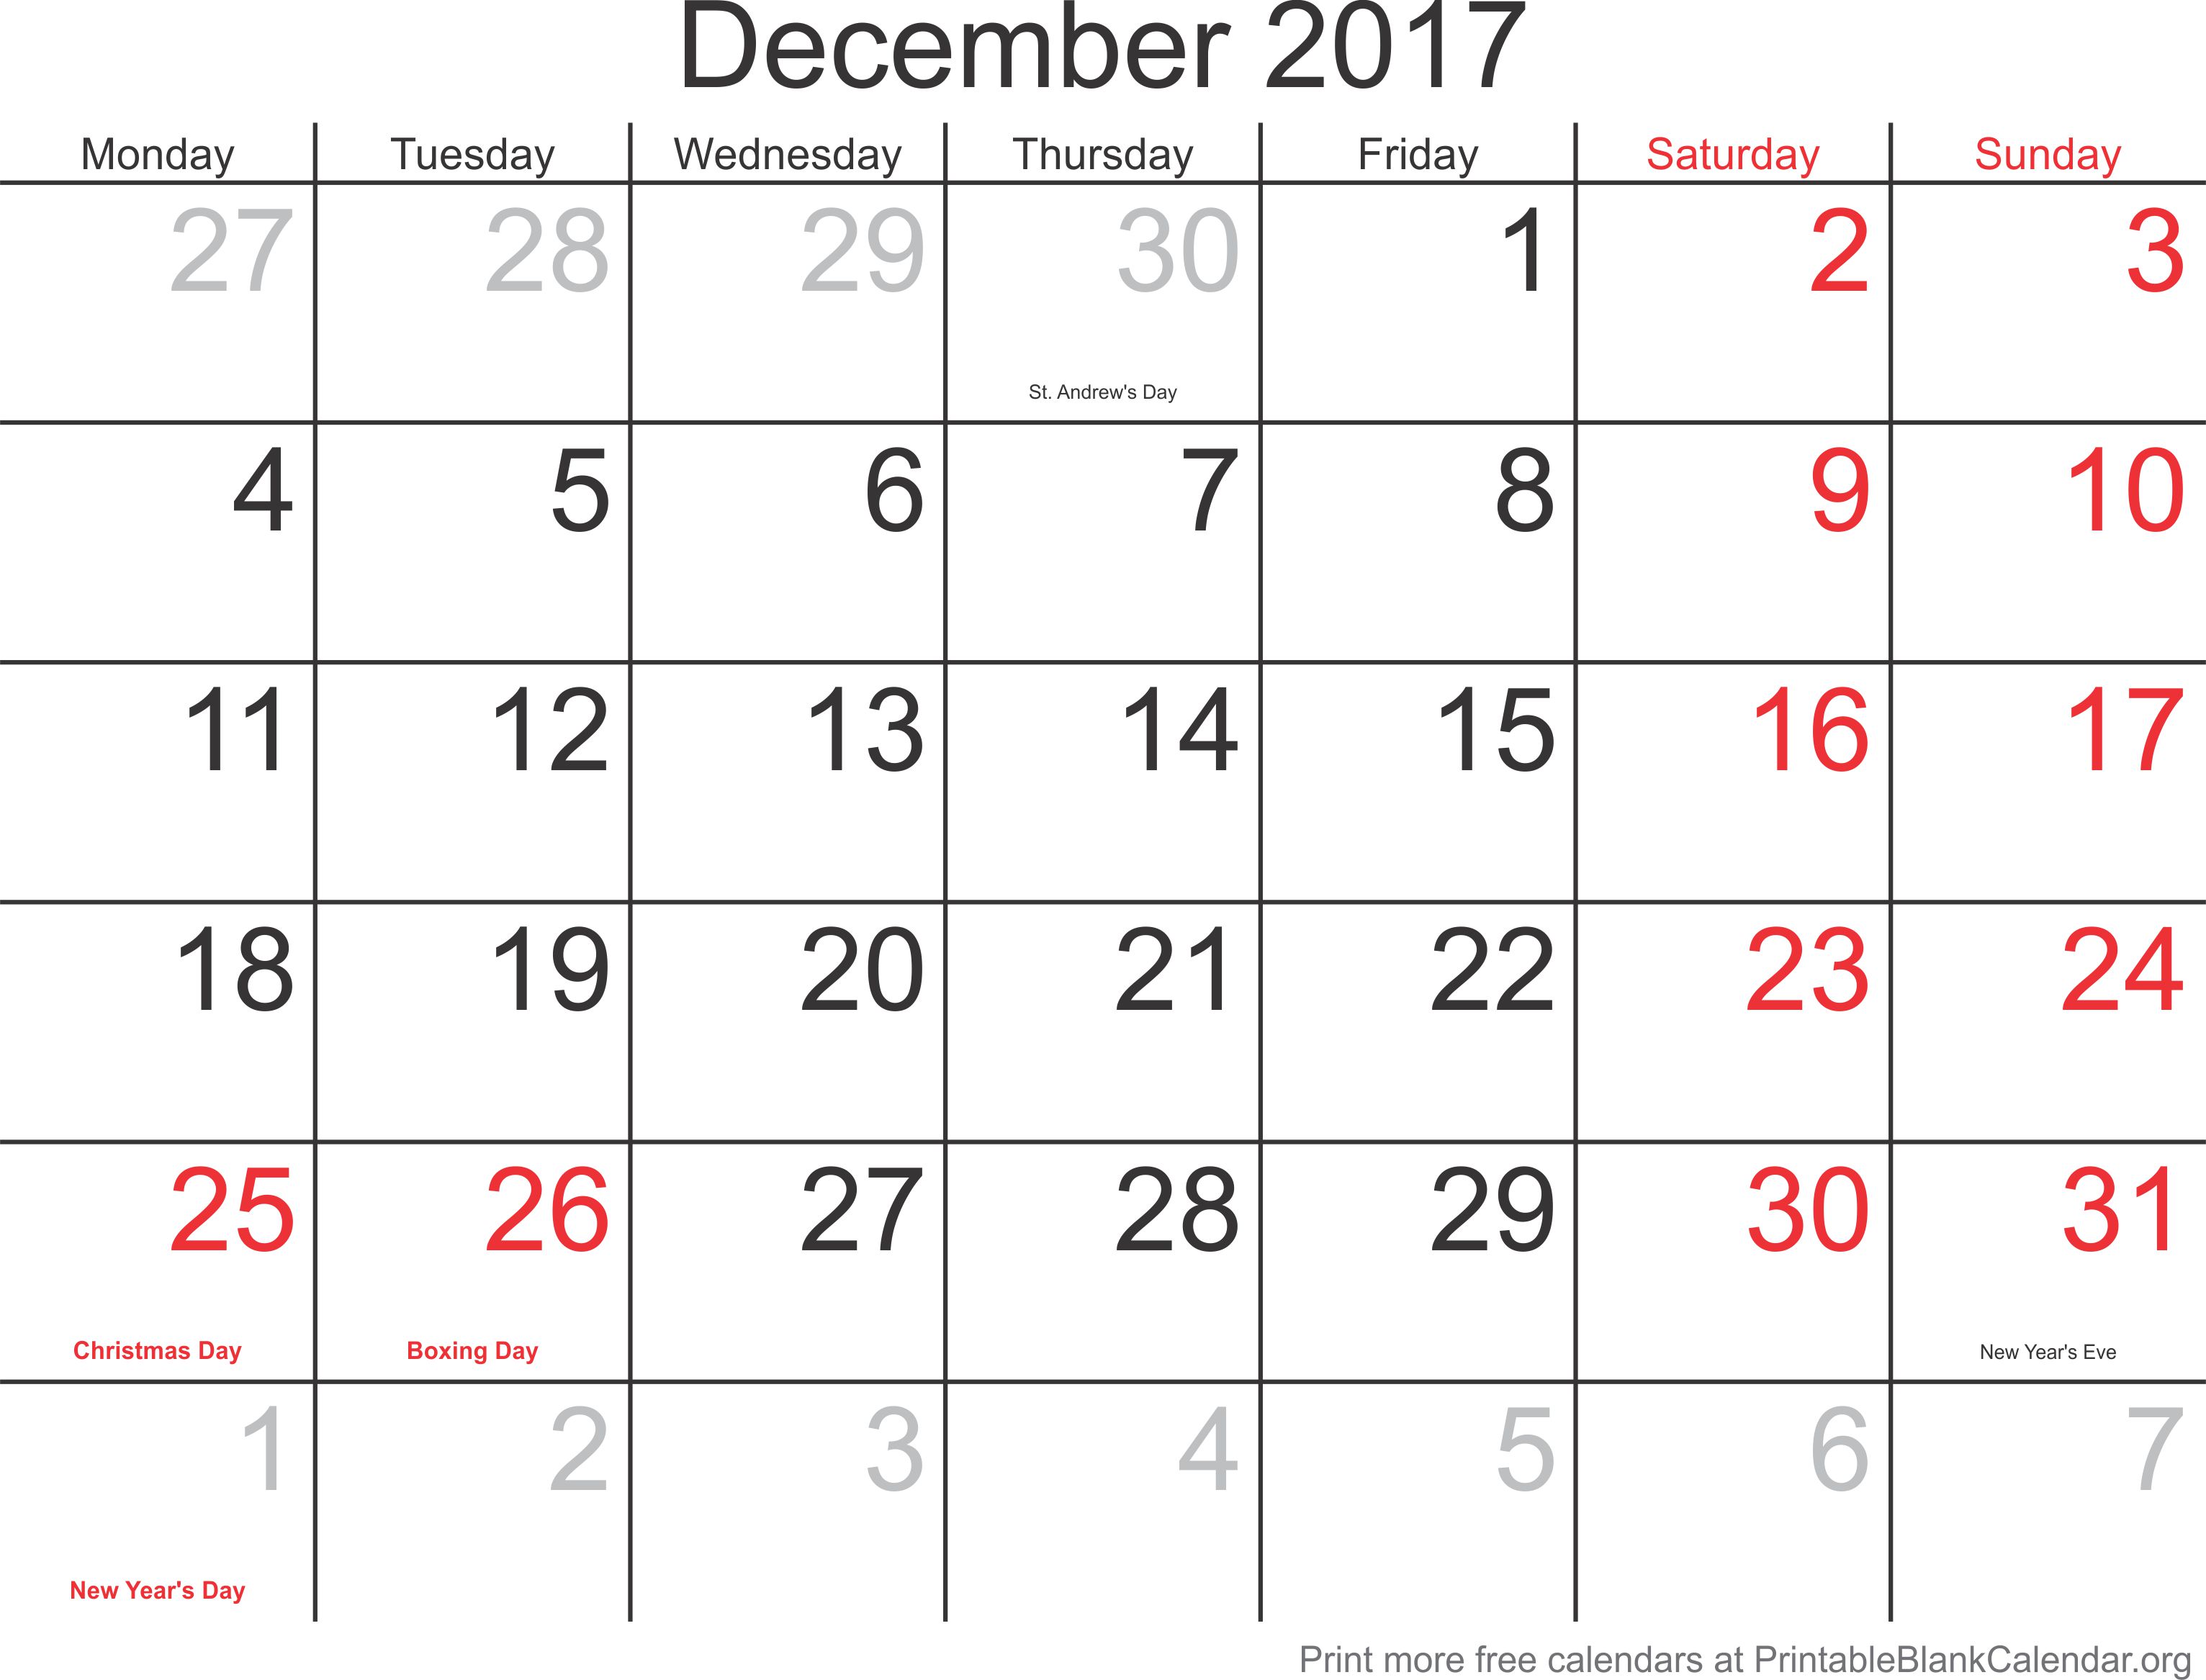 december-2017-free-printable-calendar-printable-blank-calendar